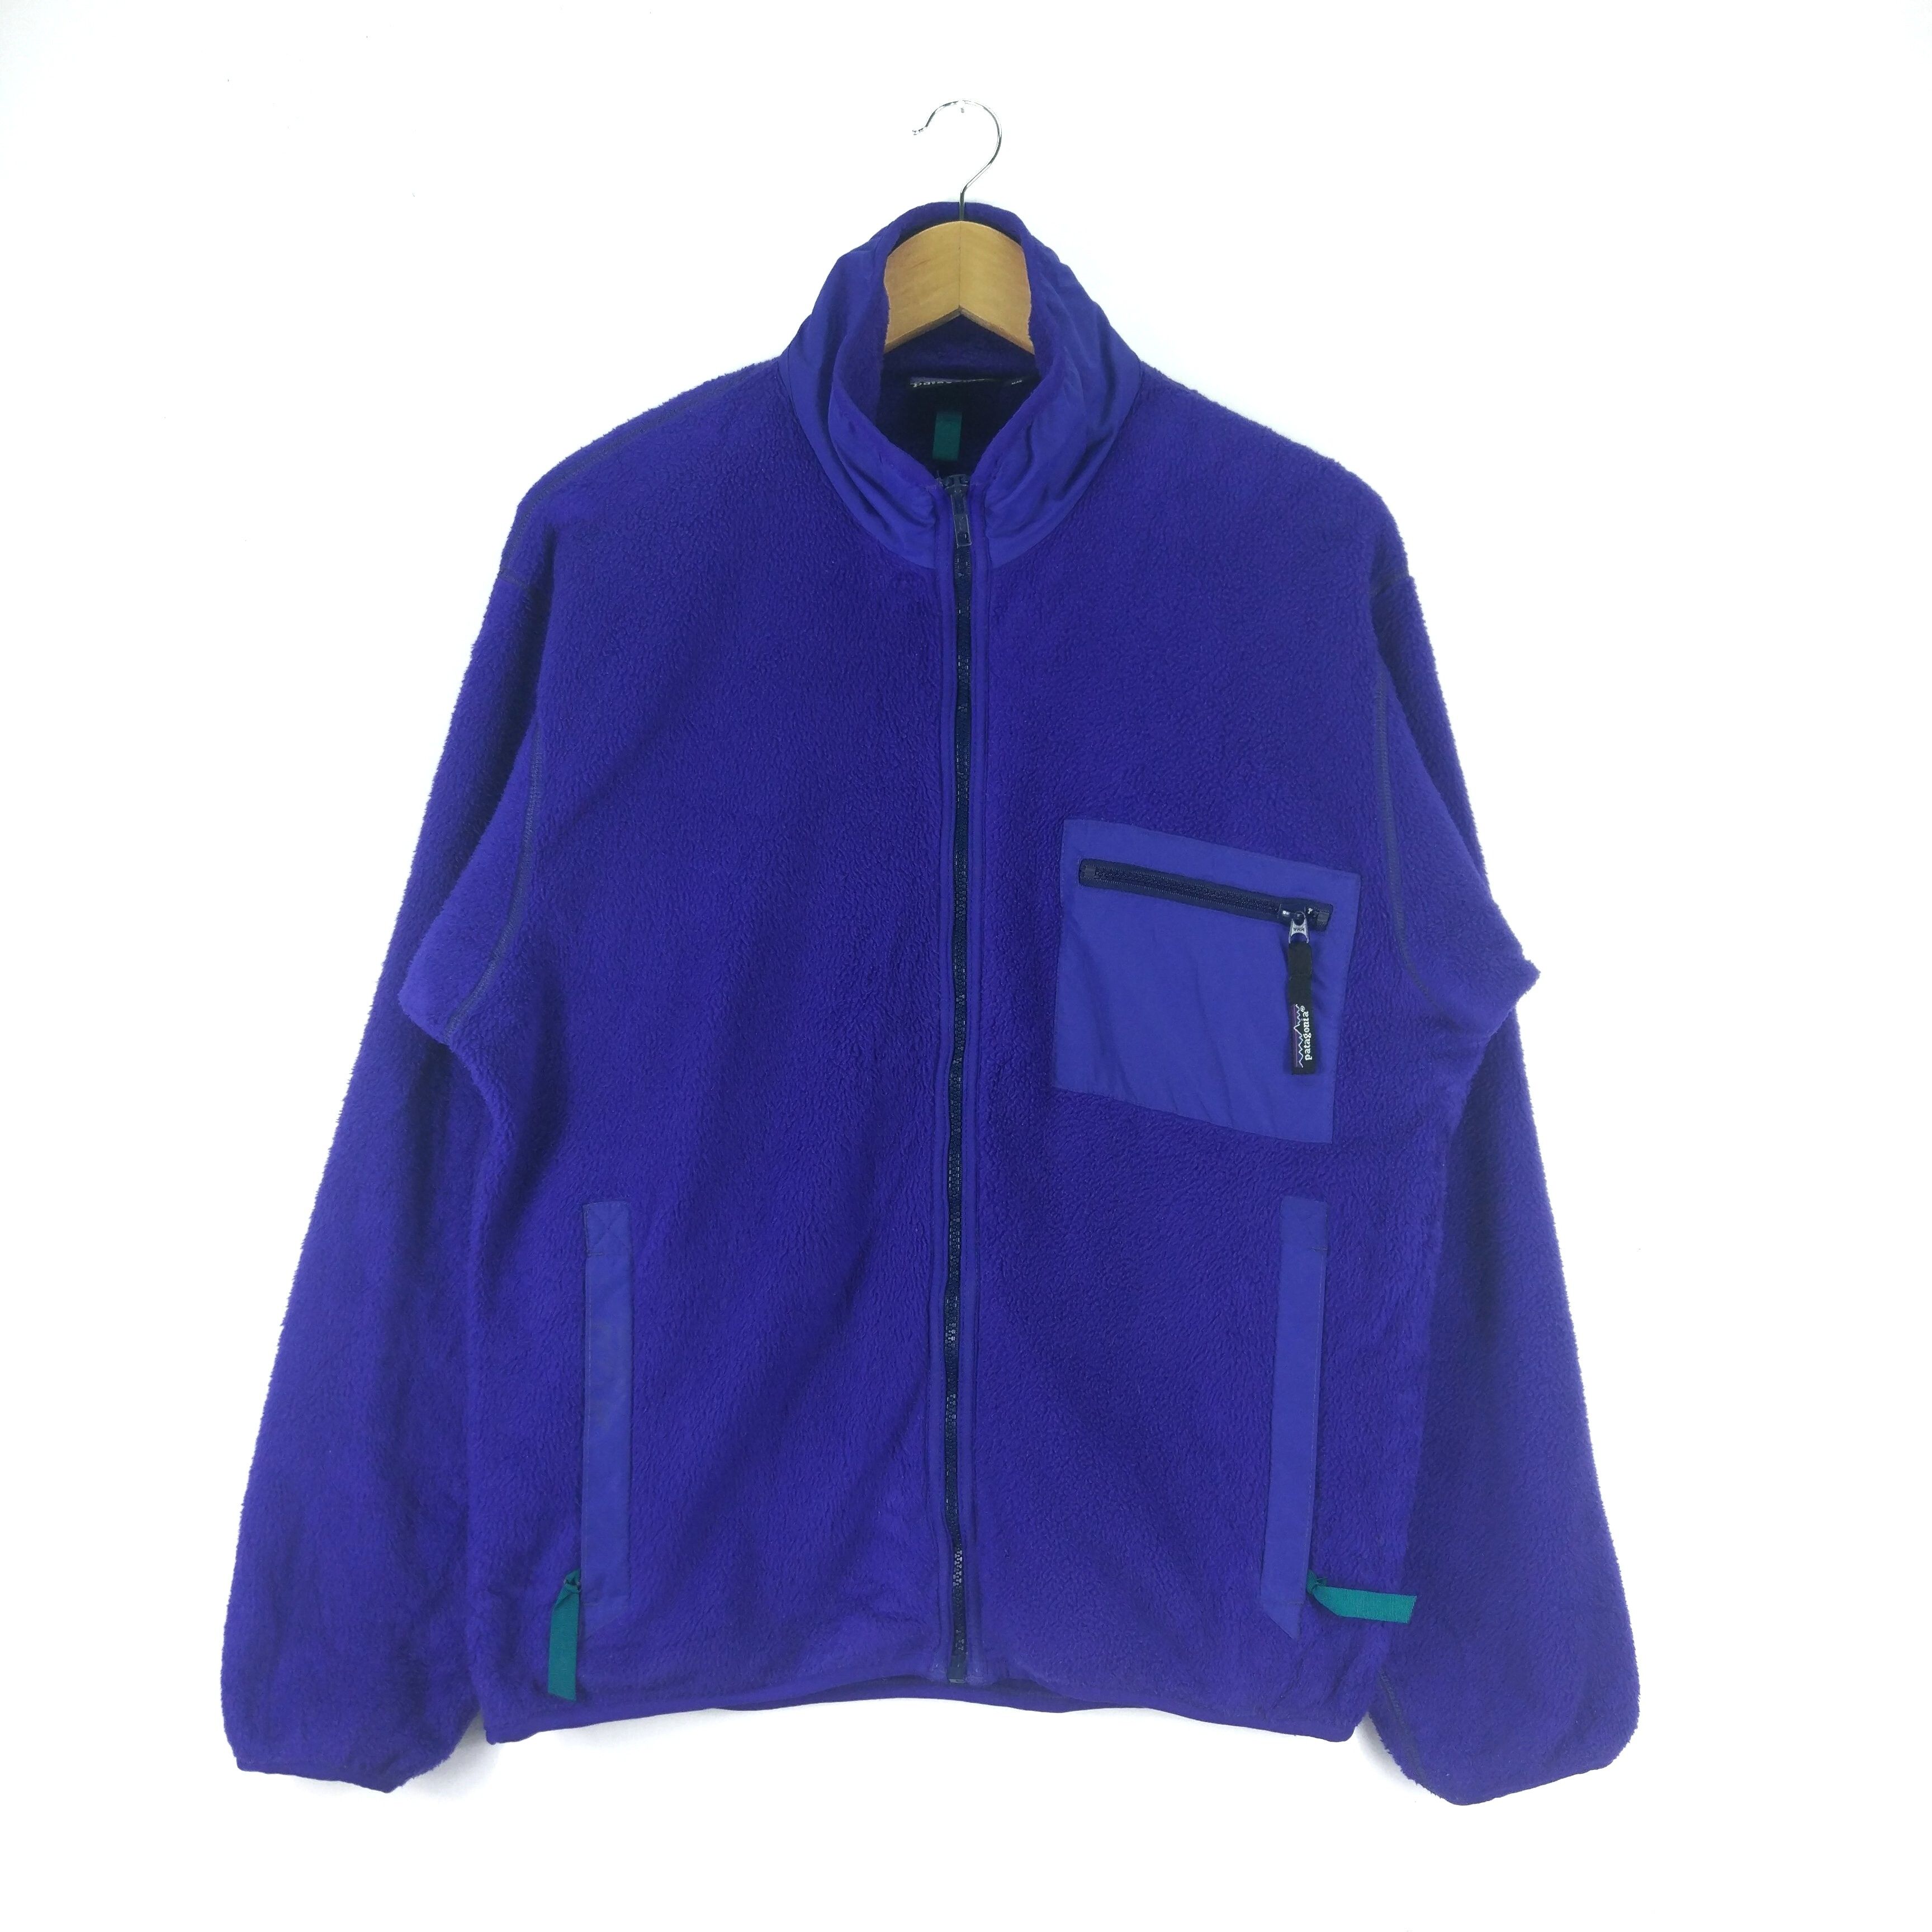 Patagonia Zip Up Fleece Jacket Made in USA - 1